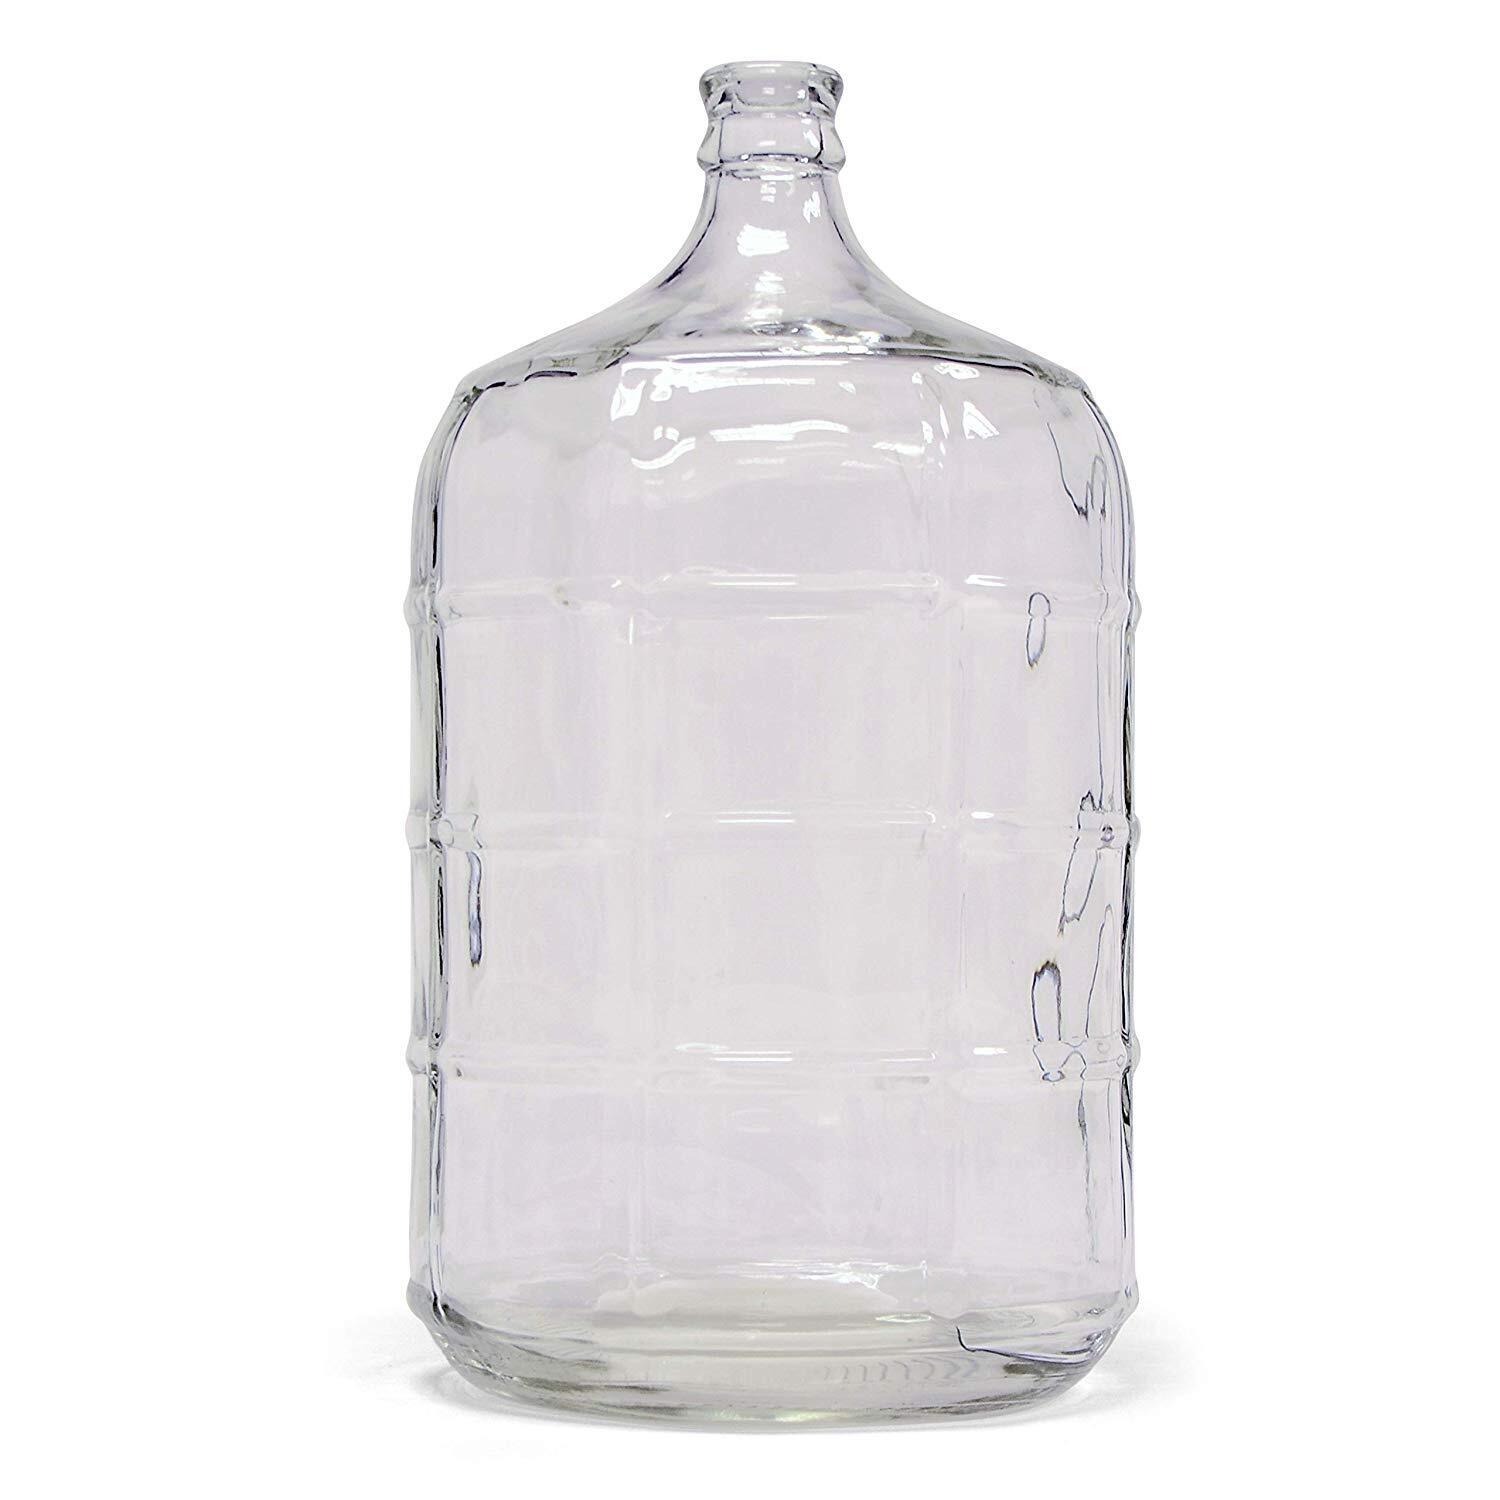 Glass Water Jug - 5 Gallon